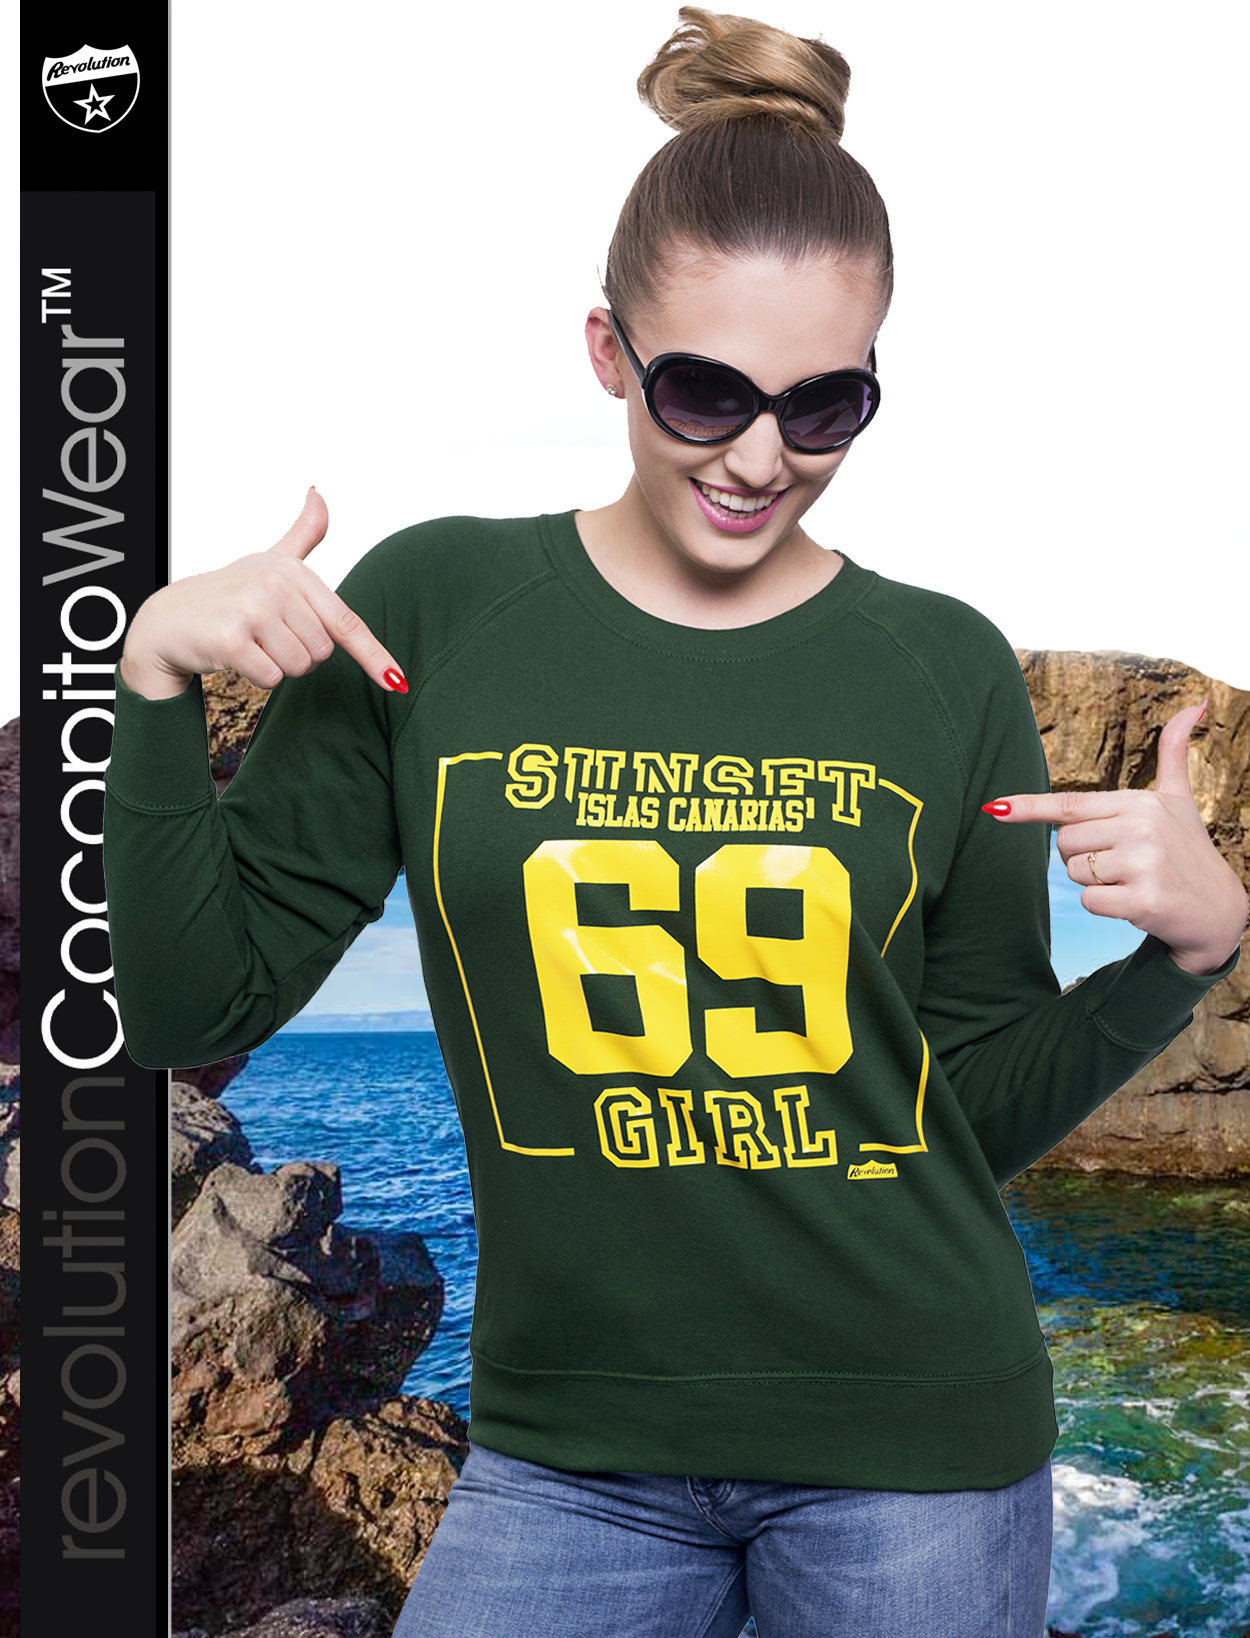 SUNSET Islas Canarias 69 Girl - bluza reglan lekka